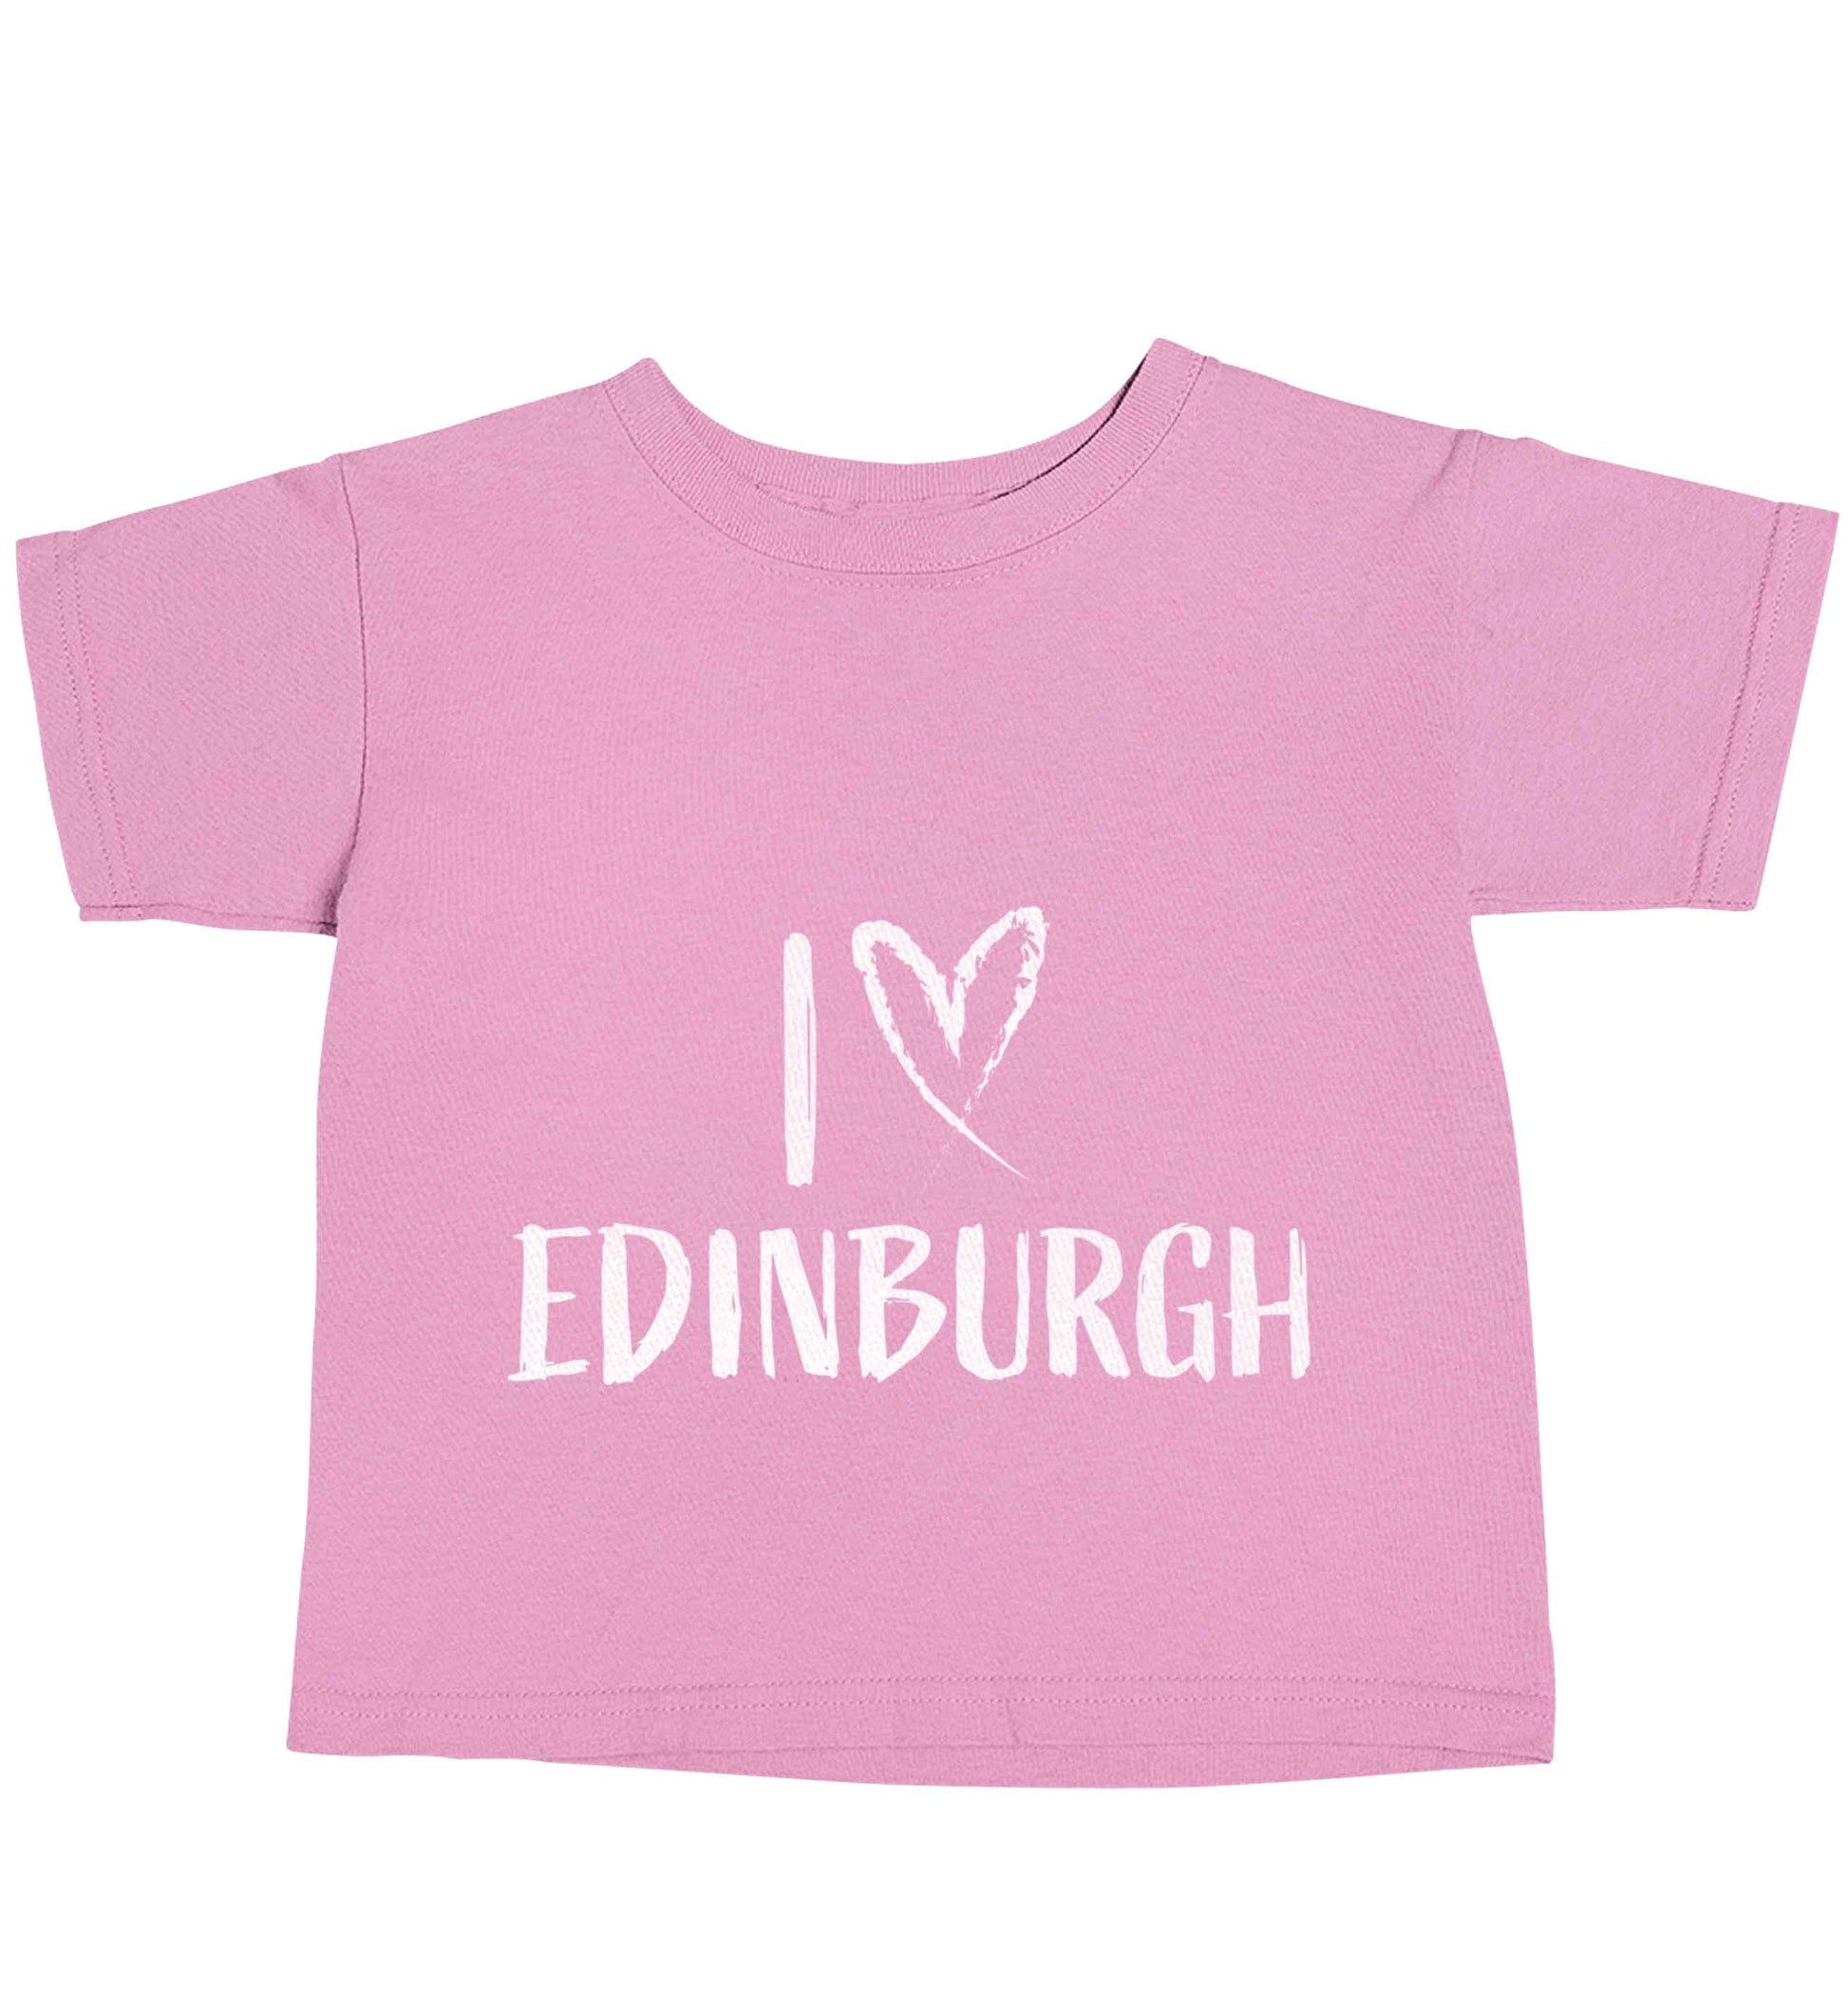 I love Edinburgh light pink baby toddler Tshirt 2 Years